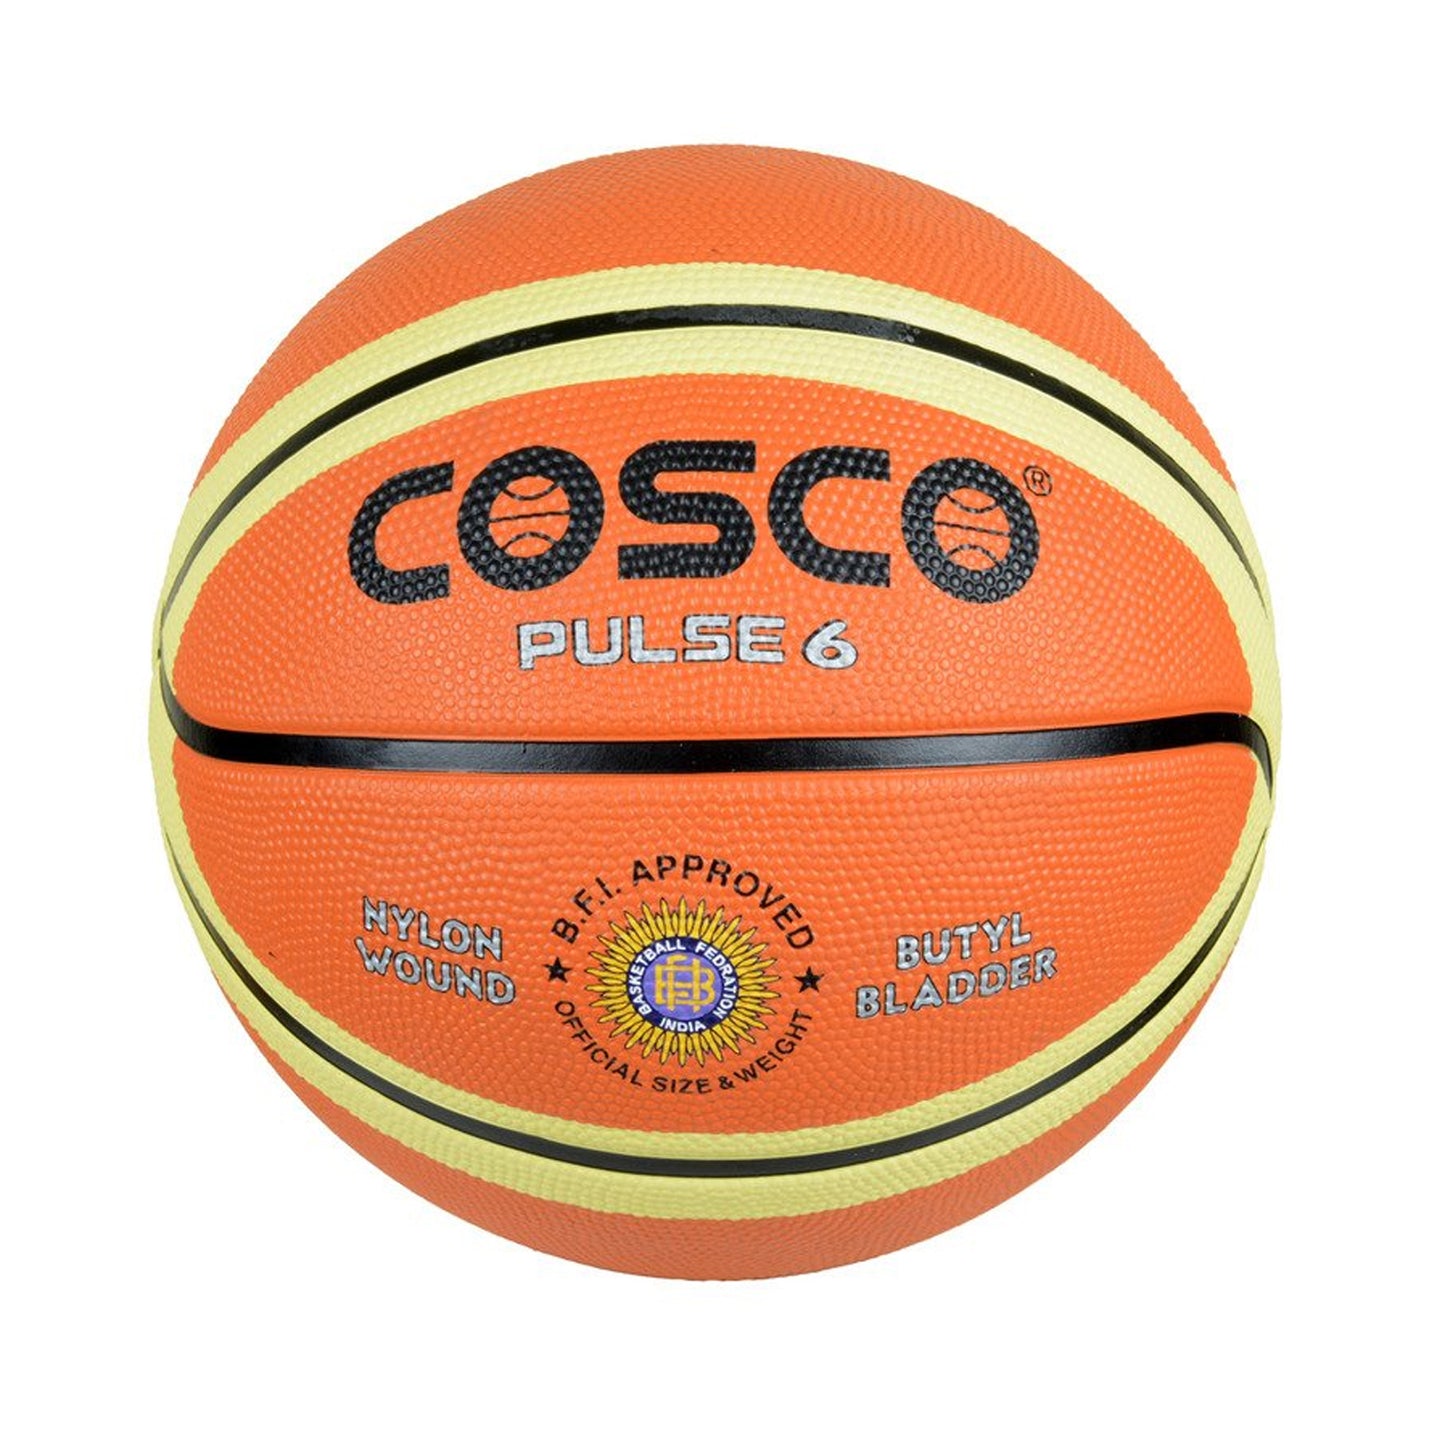 Cosco Pulse Basketball, Brown (Size 6) - Best Price online Prokicksports.com